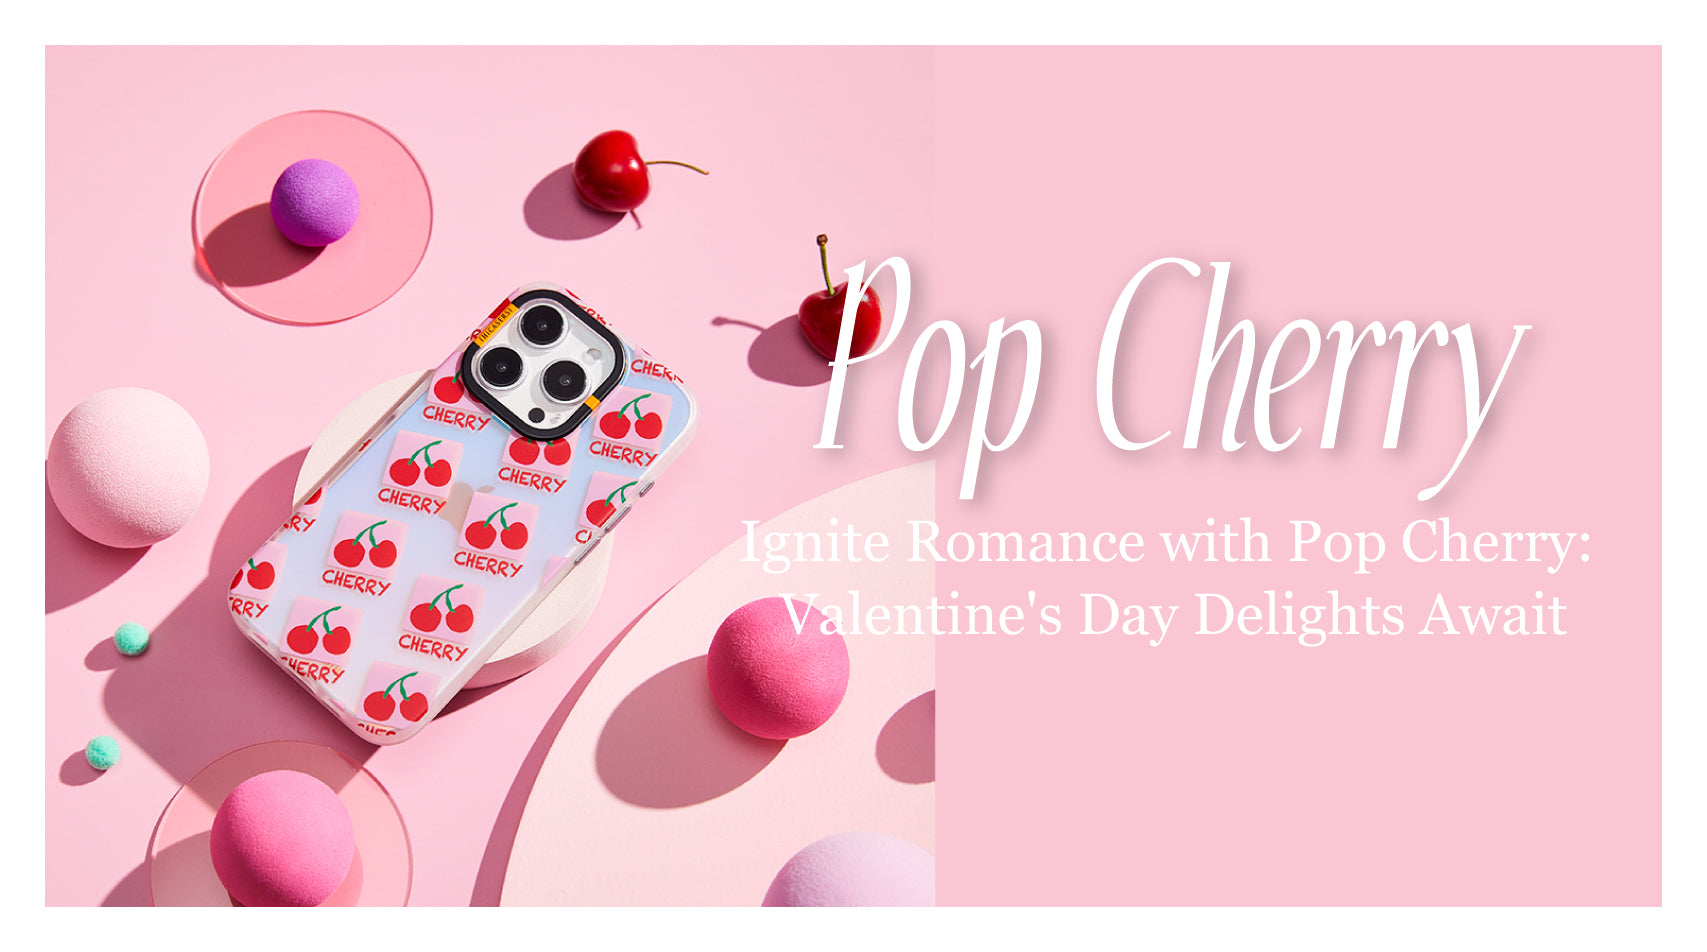 Ignite Romance with Pop Cheeey: Sweetness awaits you!